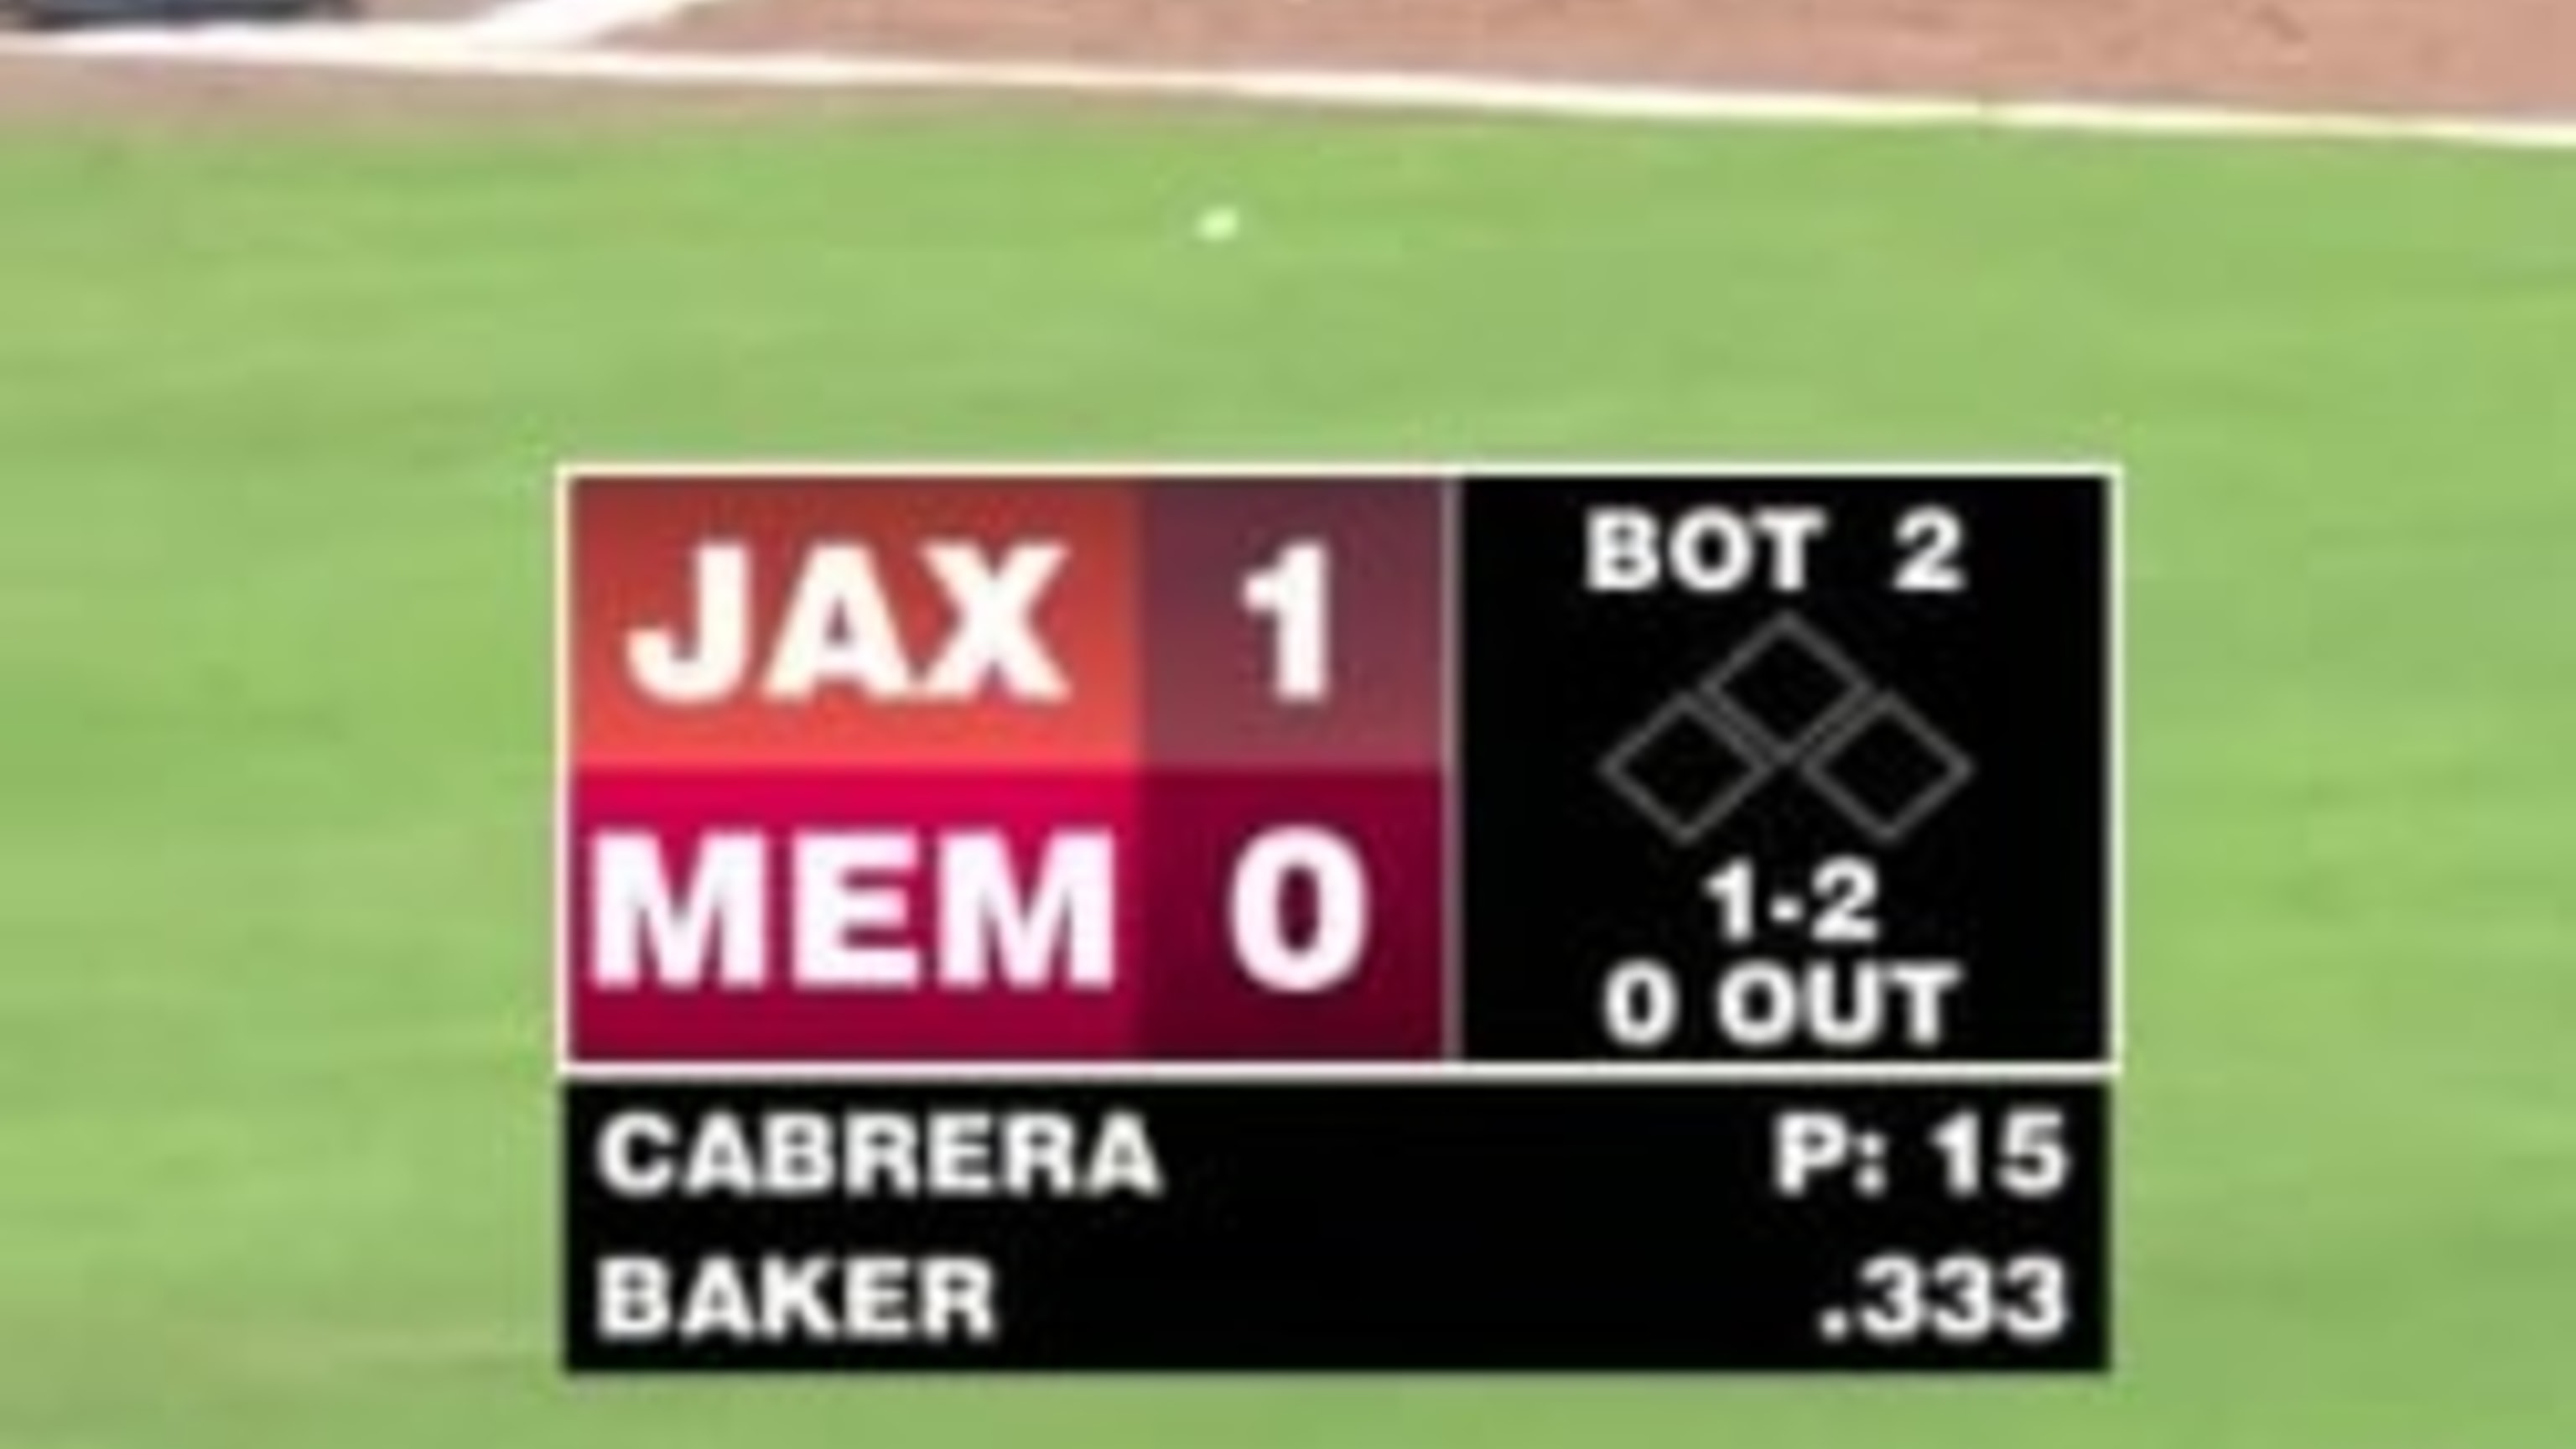 Luken Baker's 29th home run, 08/06/2023